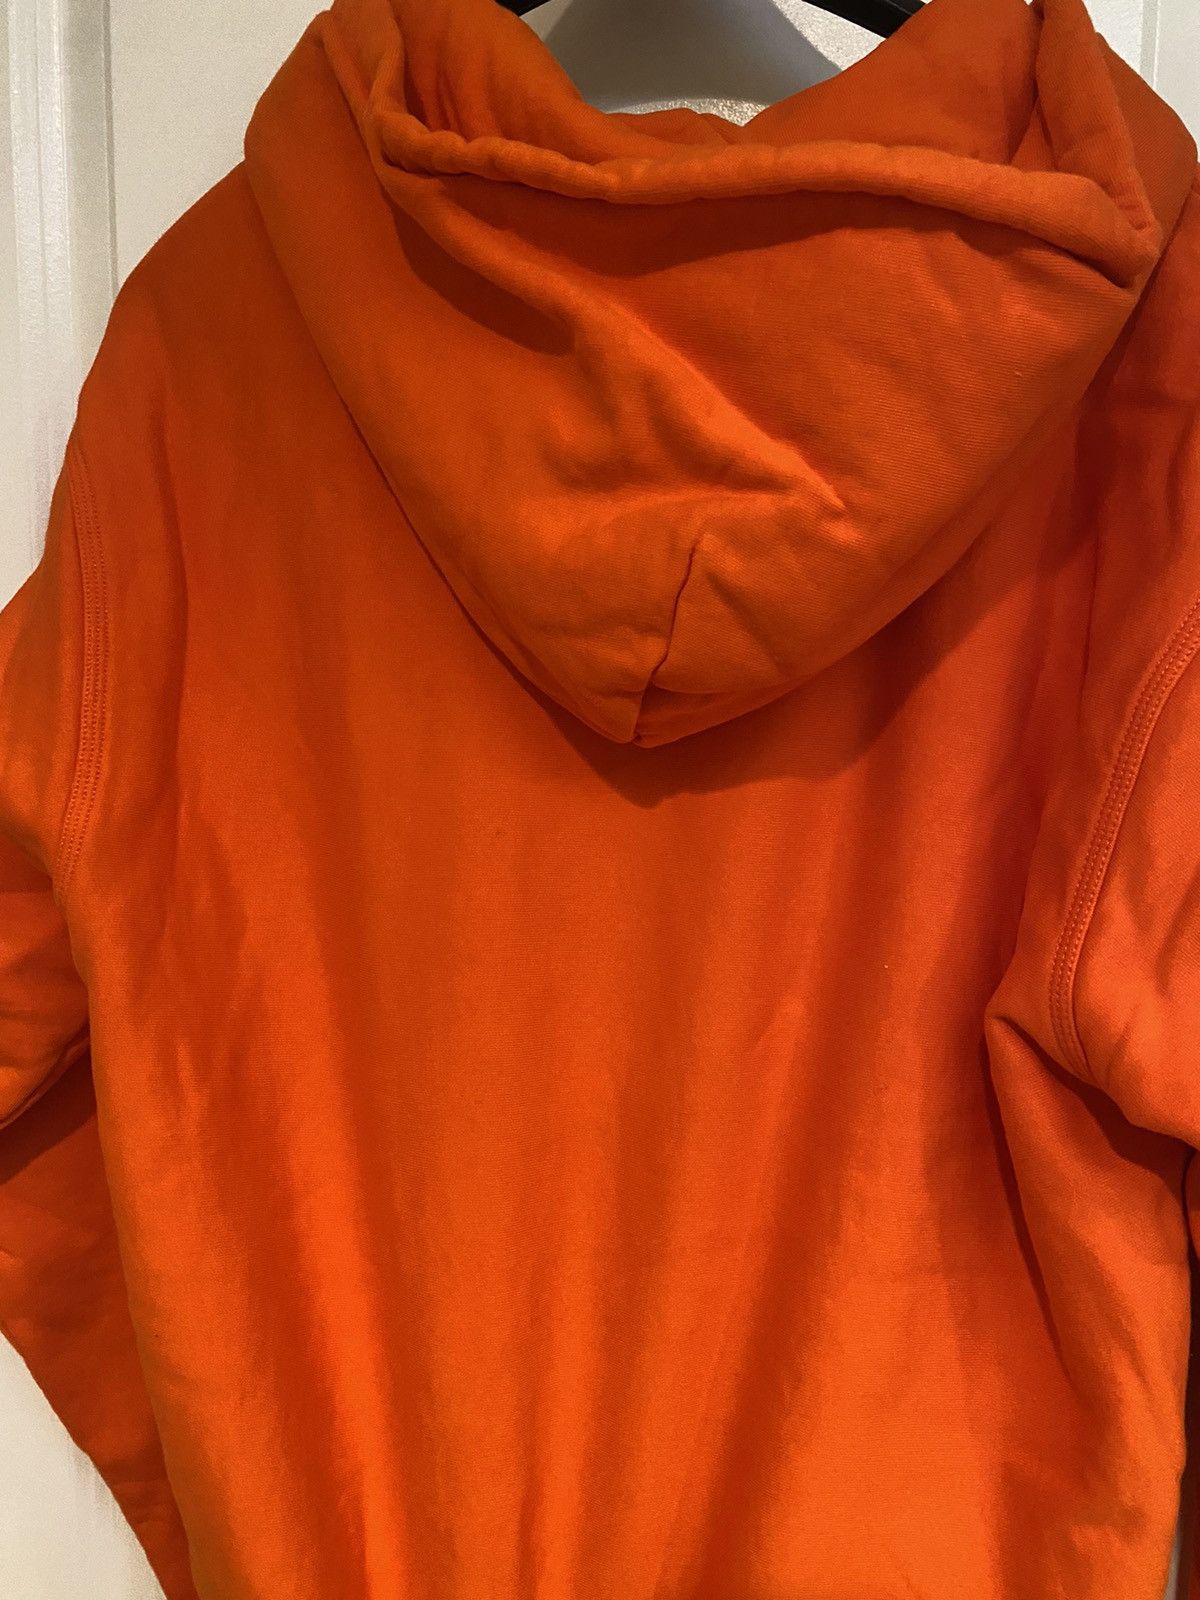 Stussy Stussy logo zip hoodie orange Size US S / EU 44-46 / 1 - 4 Thumbnail